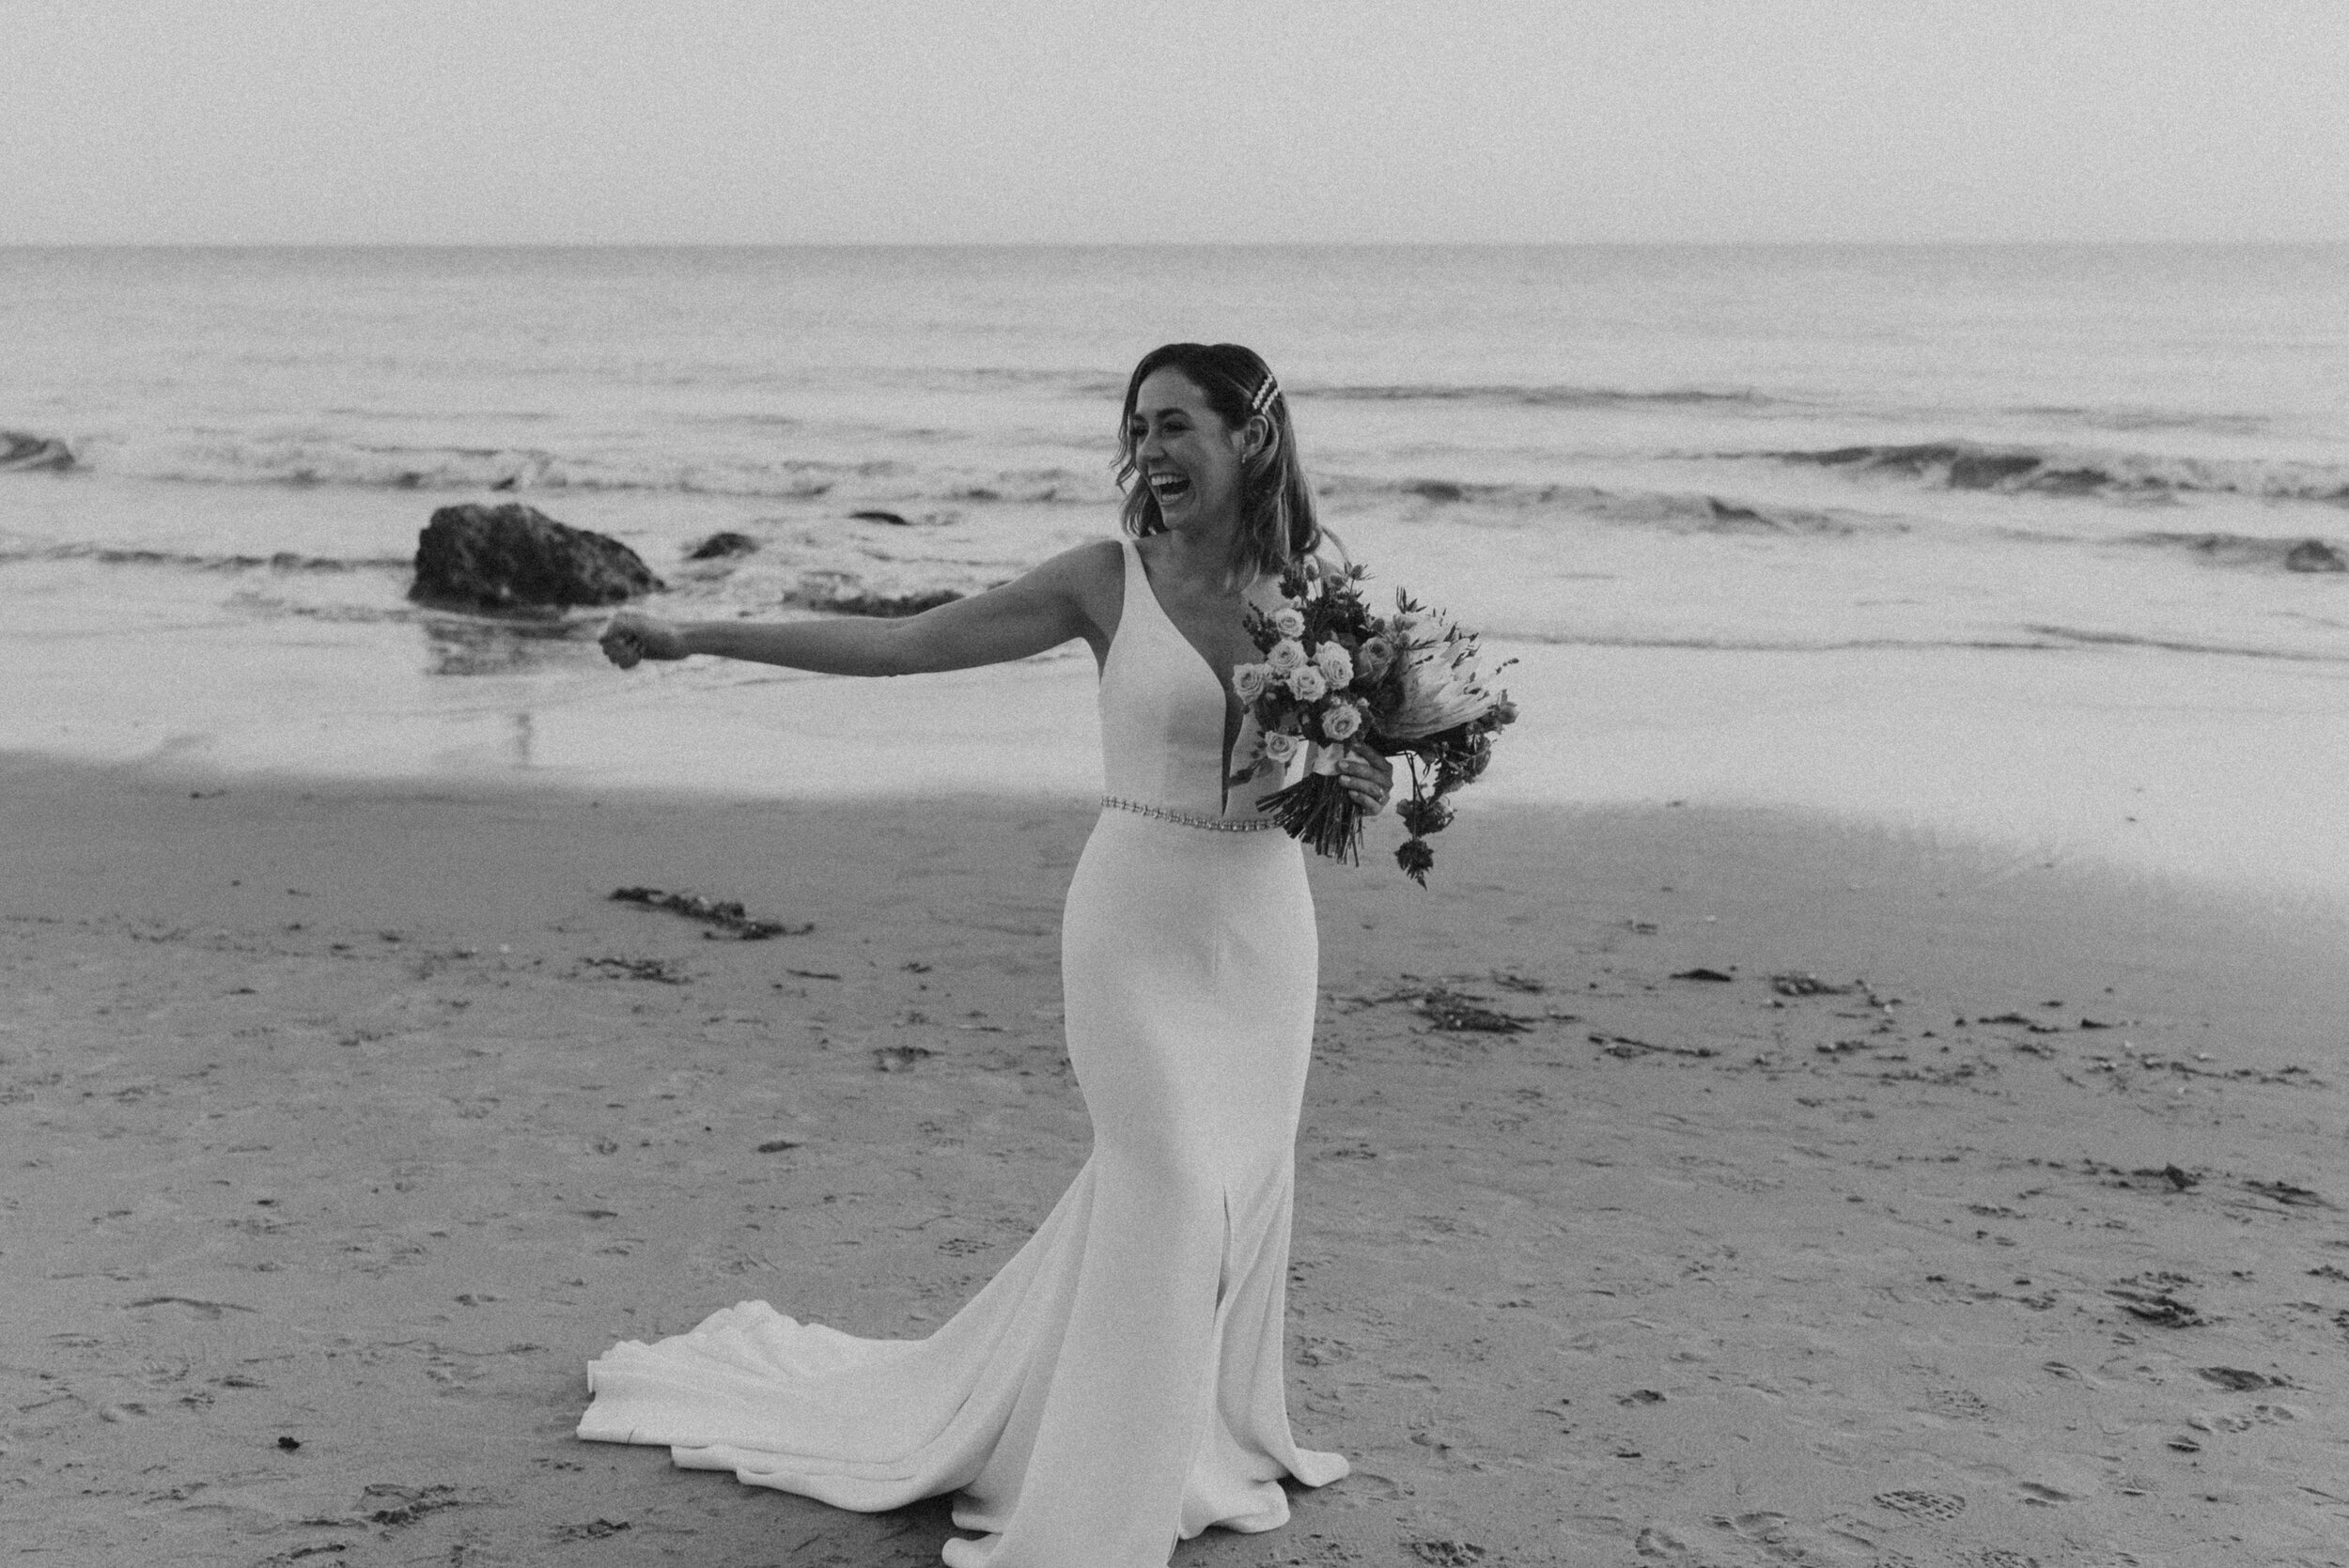  Malibu Airbnb Elopement | El Matador Beach wedding | Point Dume Malibu Bride and Groom portraits | California Coast | California Elopement photographer 